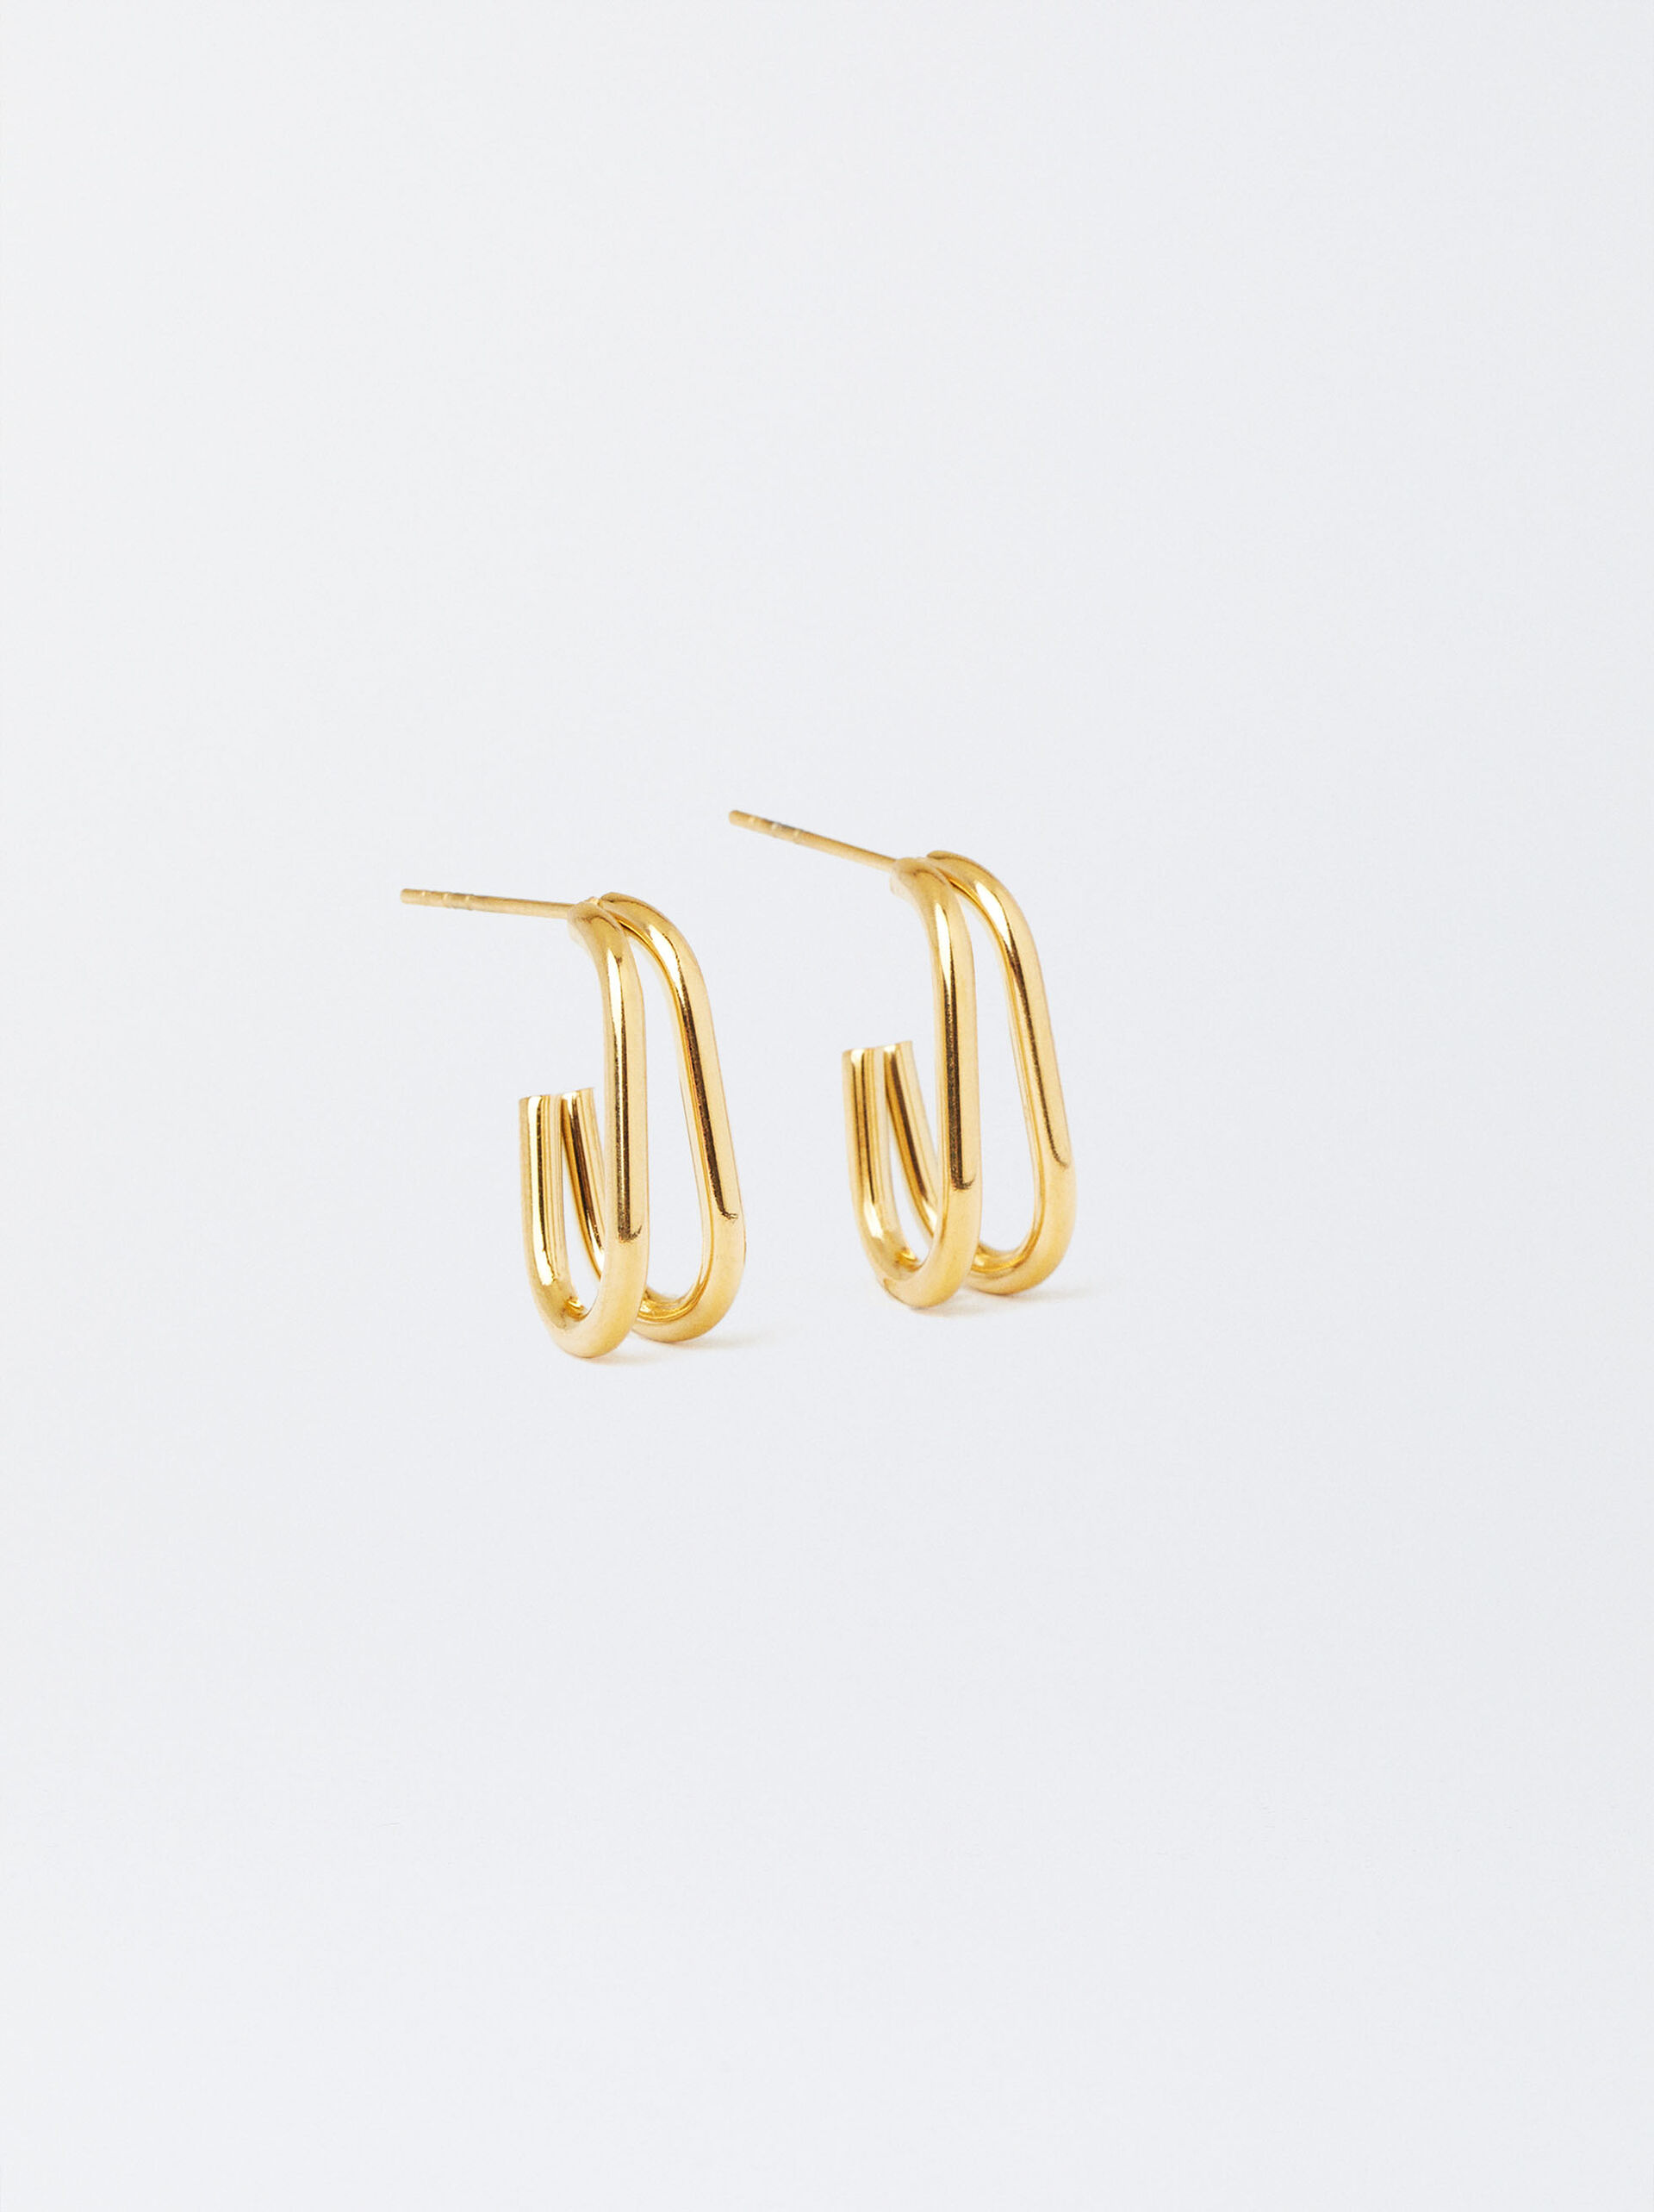 Golden Stainless Steel Earrings image number 0.0